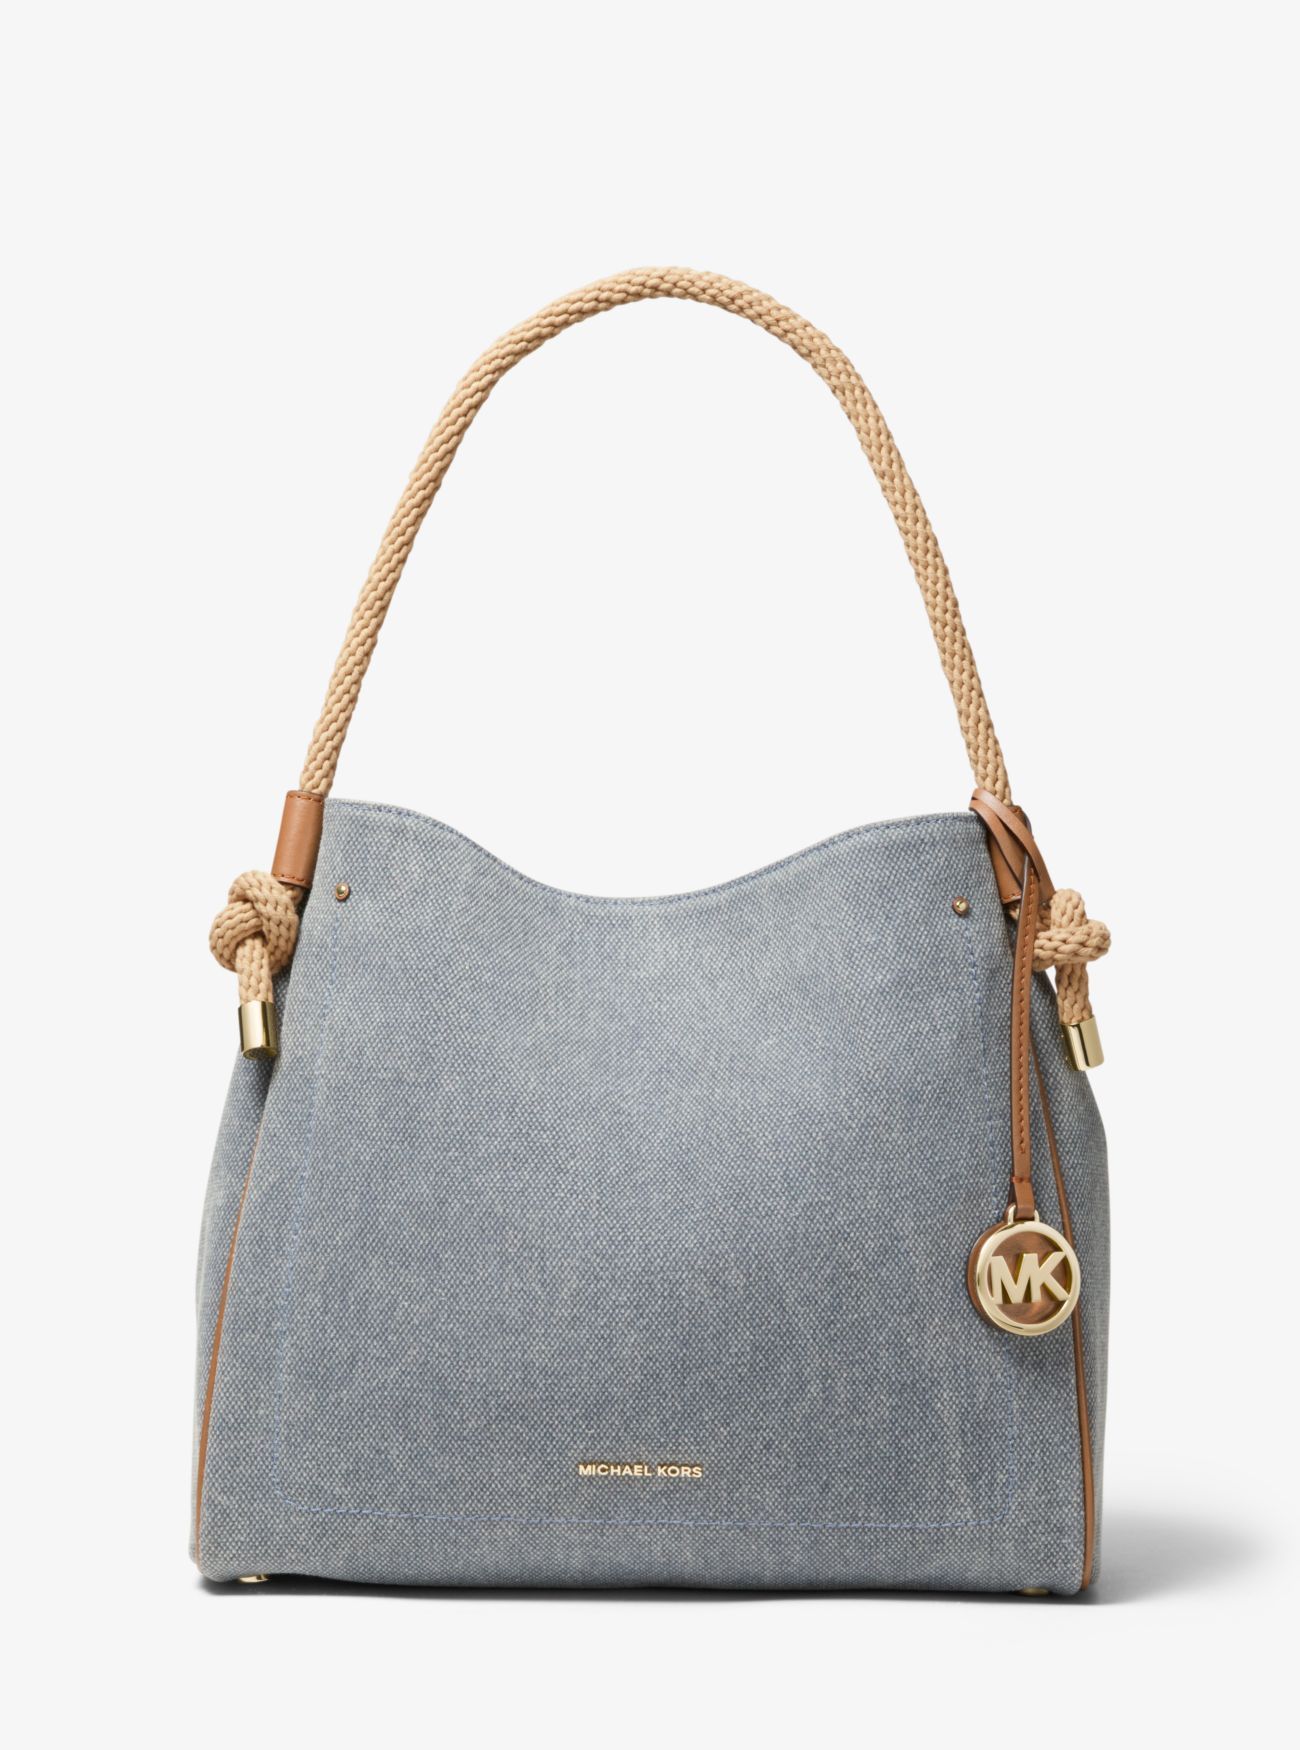 michael kors latest handbags